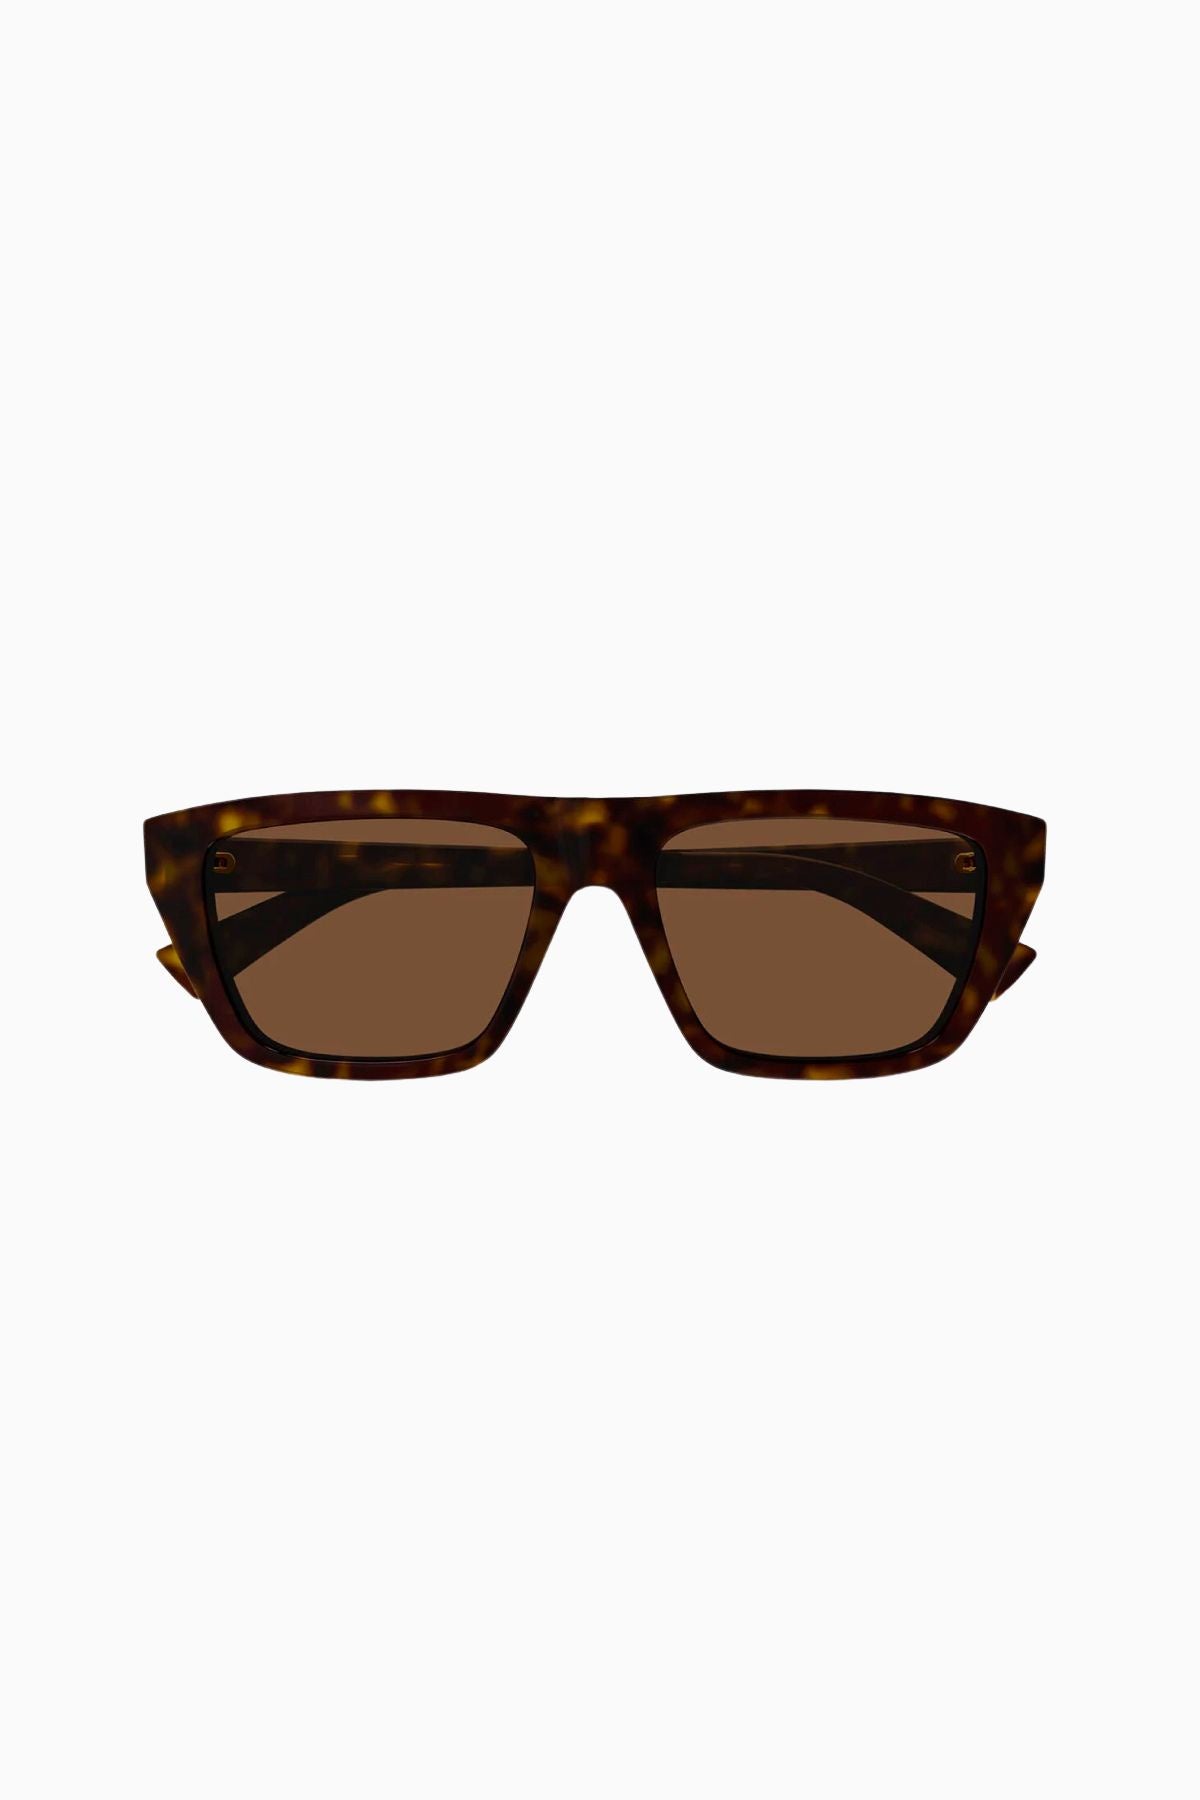 Bottega Veneta Sleek Square Framed Sunglasses - Havana